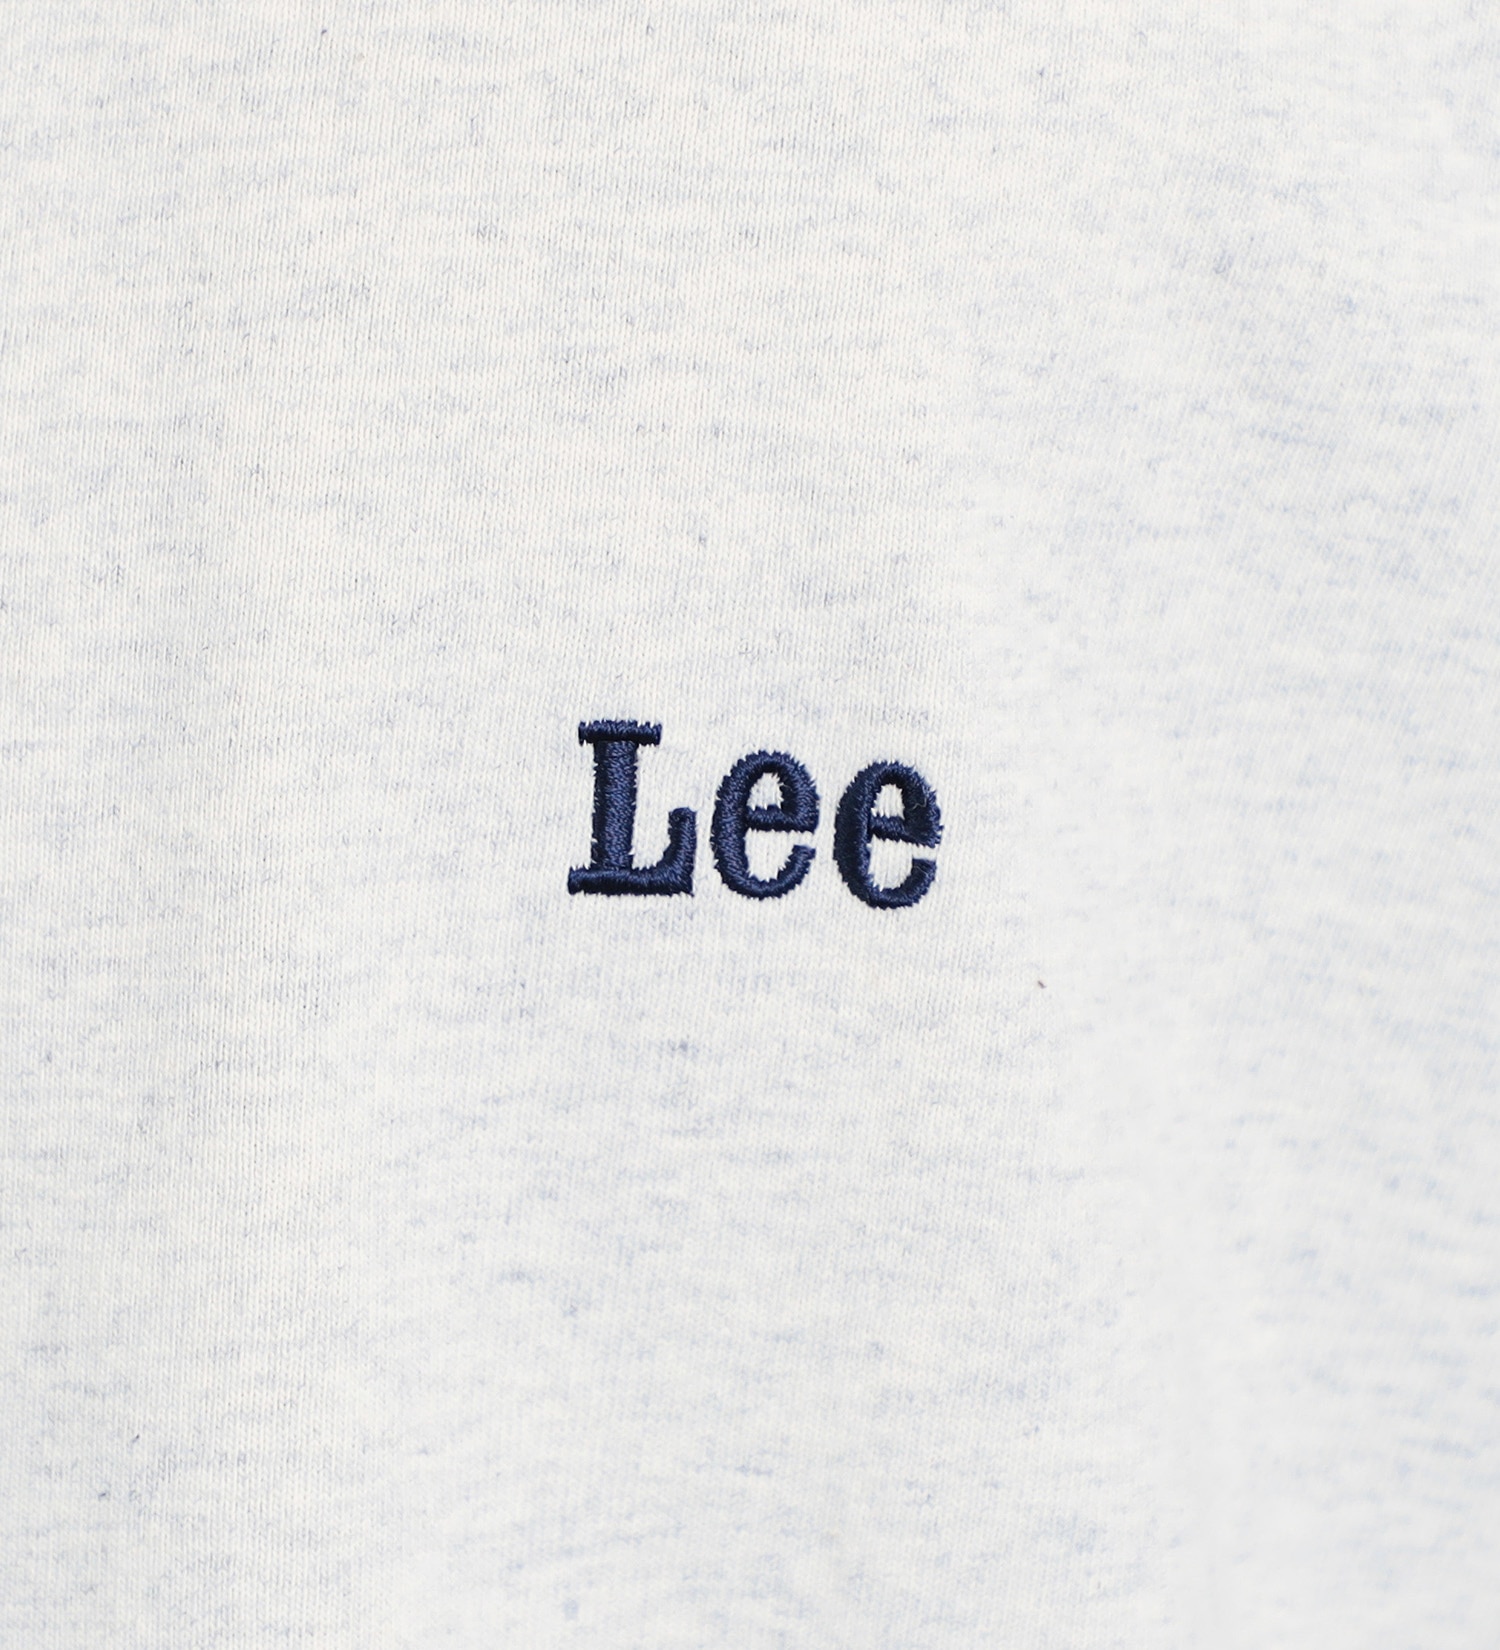 Lee(リー)のバックプリント オールドアド ネオン ショートスリーブTee|トップス/Tシャツ/カットソー/メンズ|グレー2